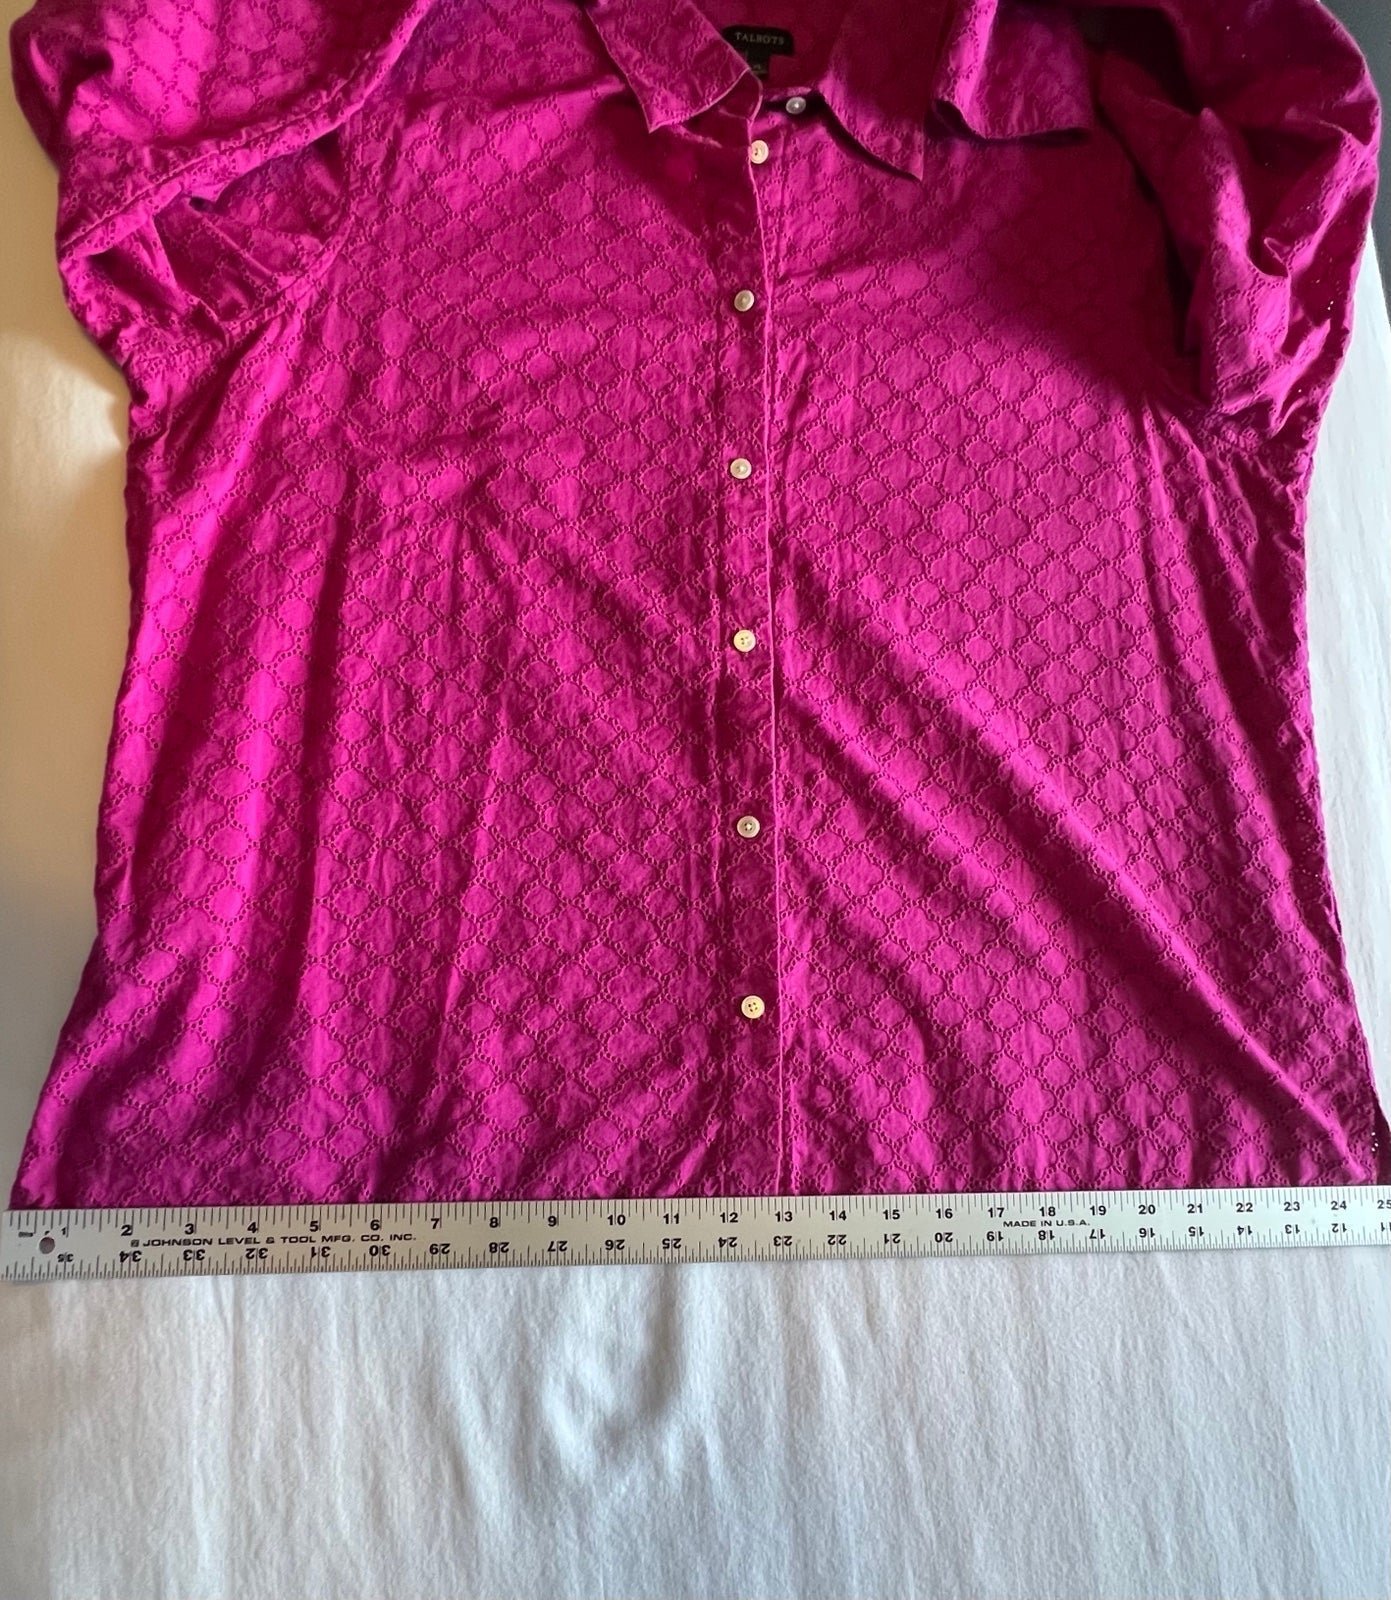 The Best Seller Talbots Hot Pink, 100% Cotton, Long Sleeve,  Button Down, Eyelet Shirt Size XL KizTqifzK Counter Genuine 